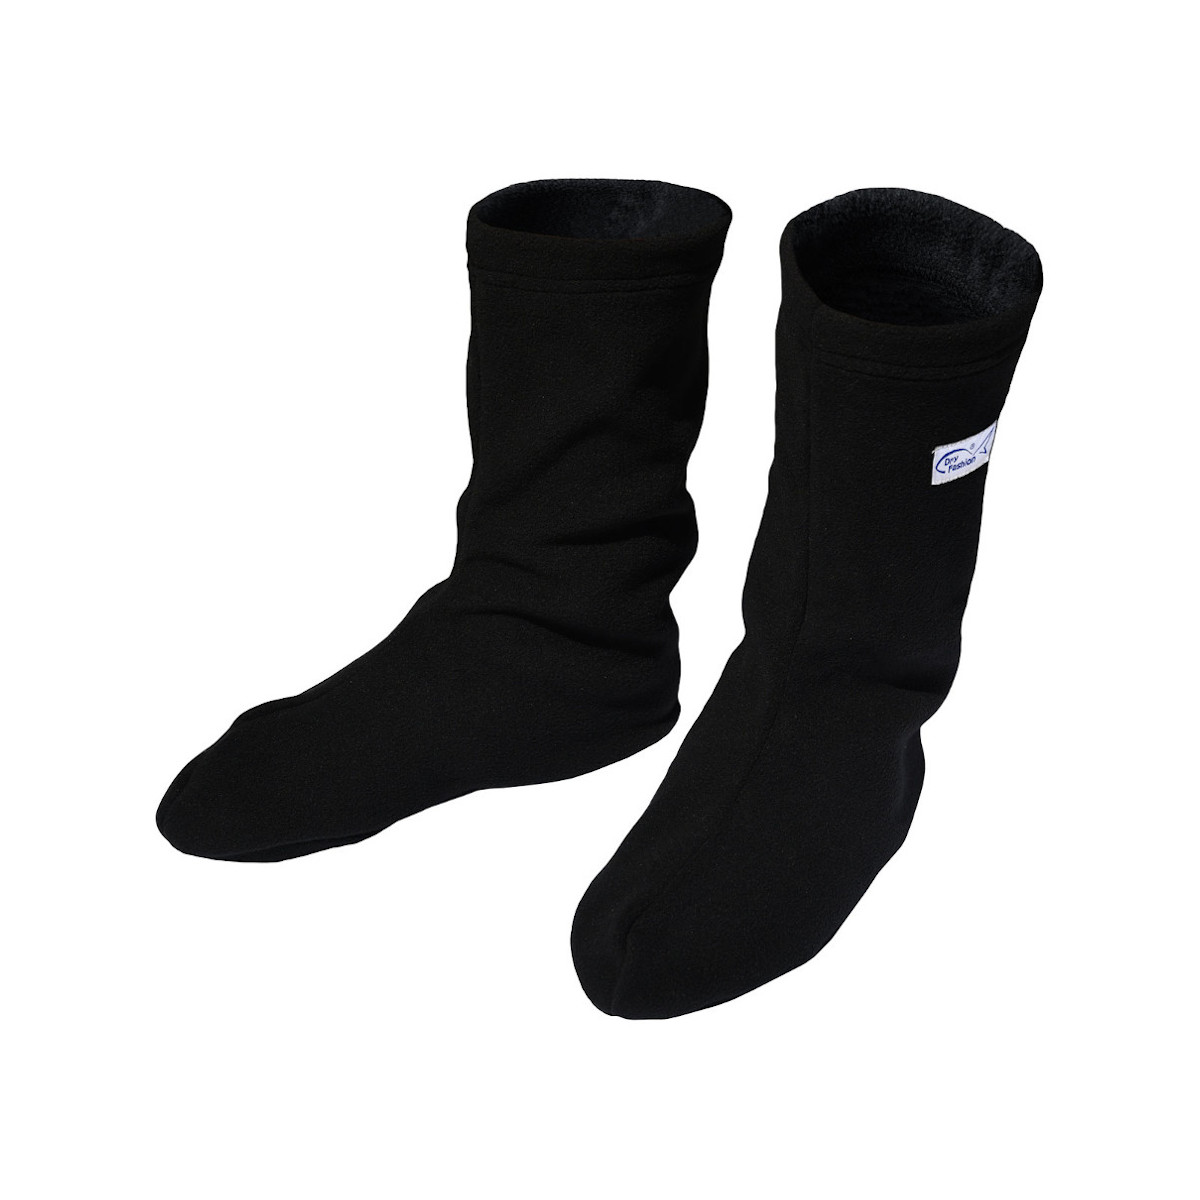 Dry Fashion chaussettes polaires noir, taille 38/39